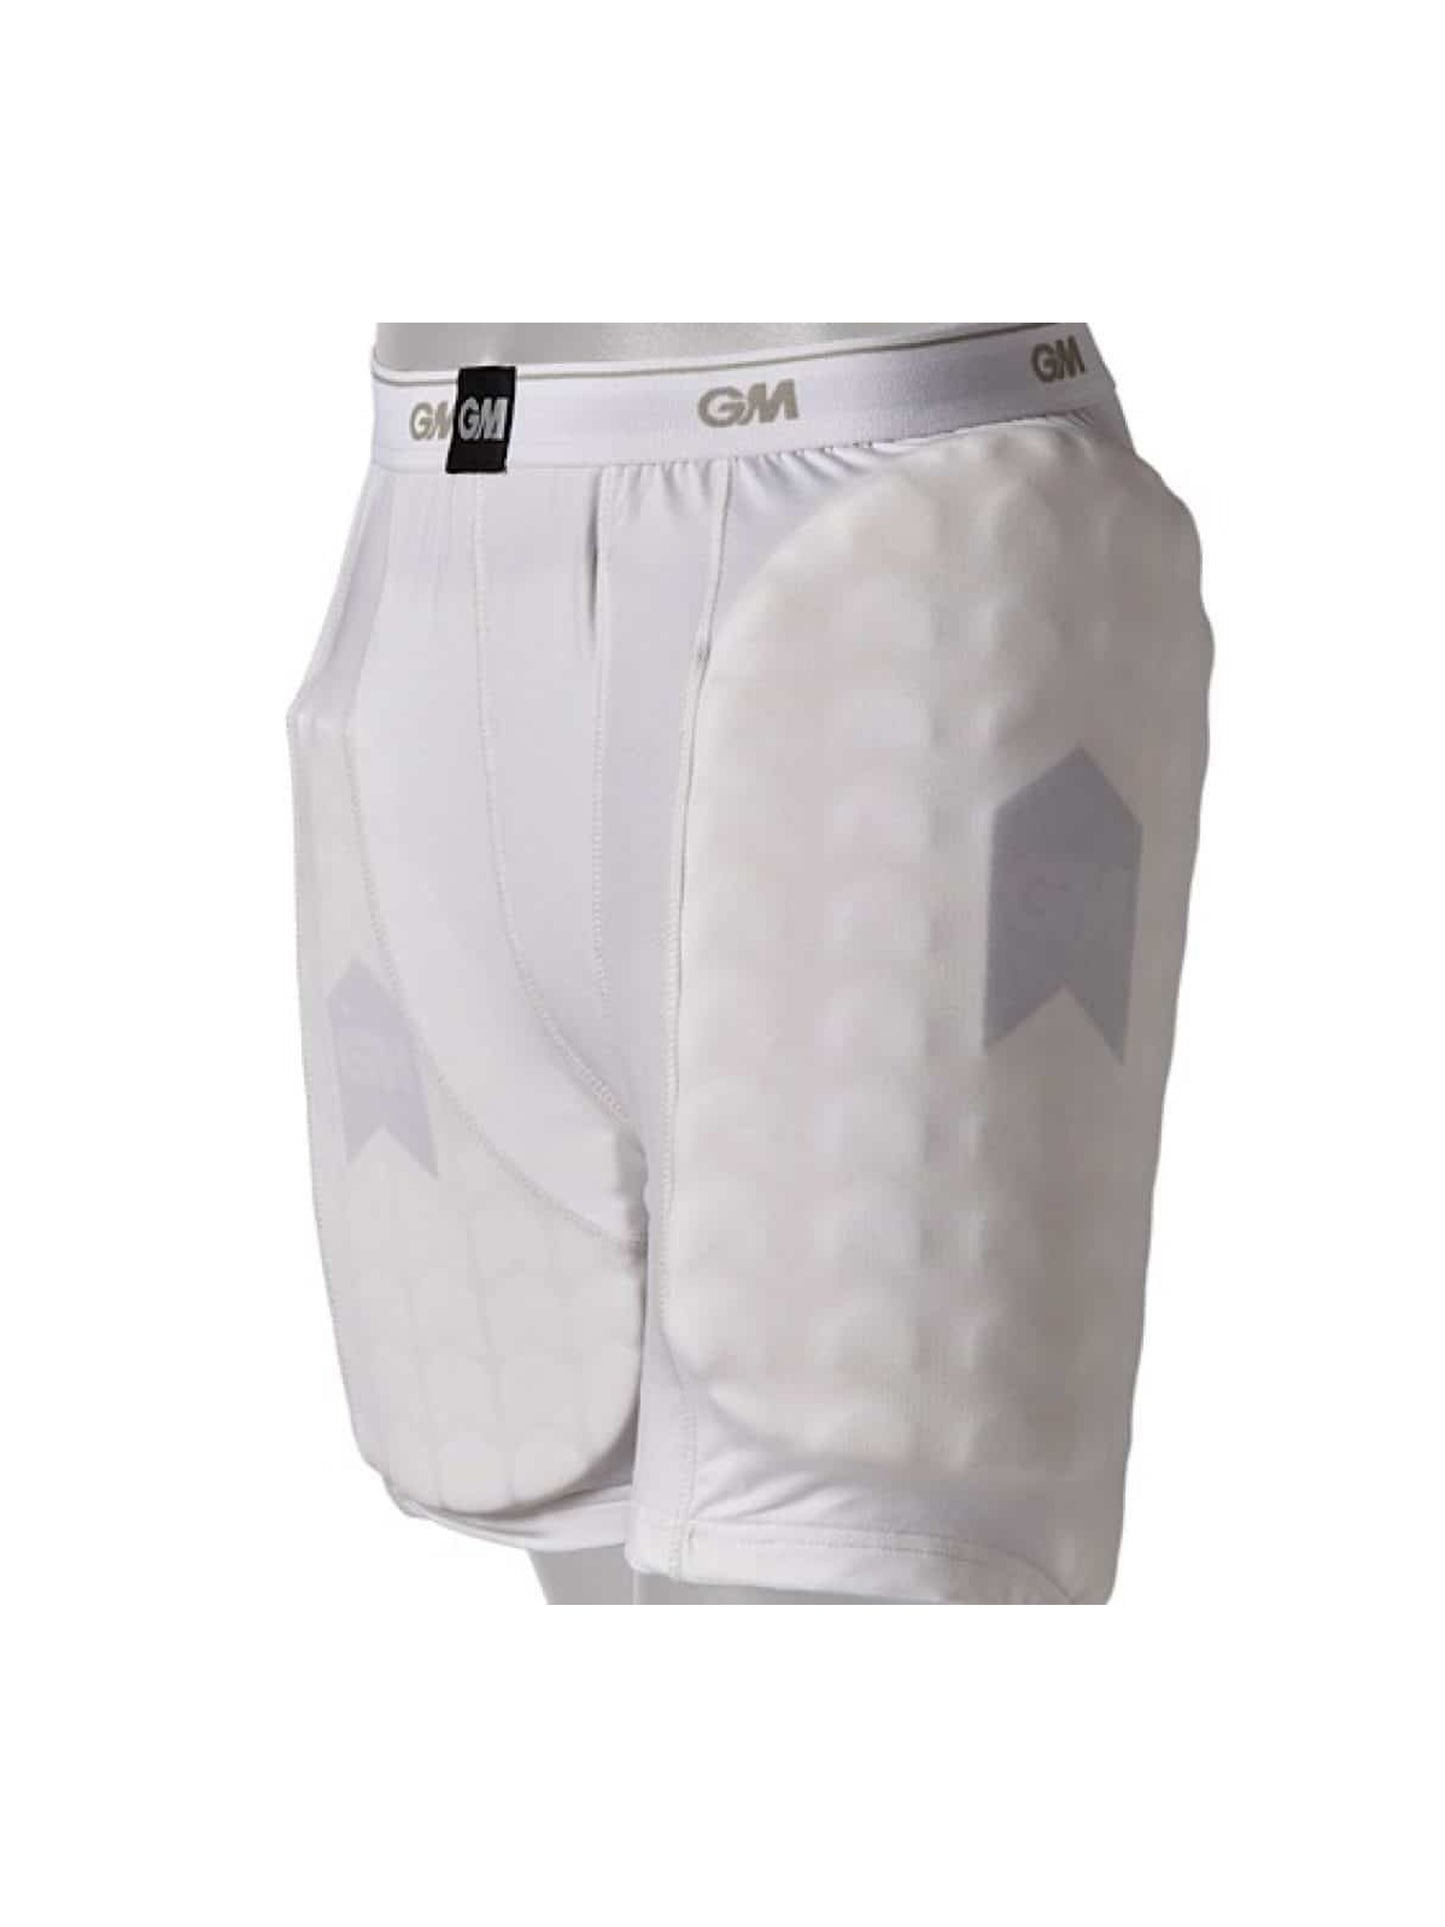 GM 909 Protective Shorts